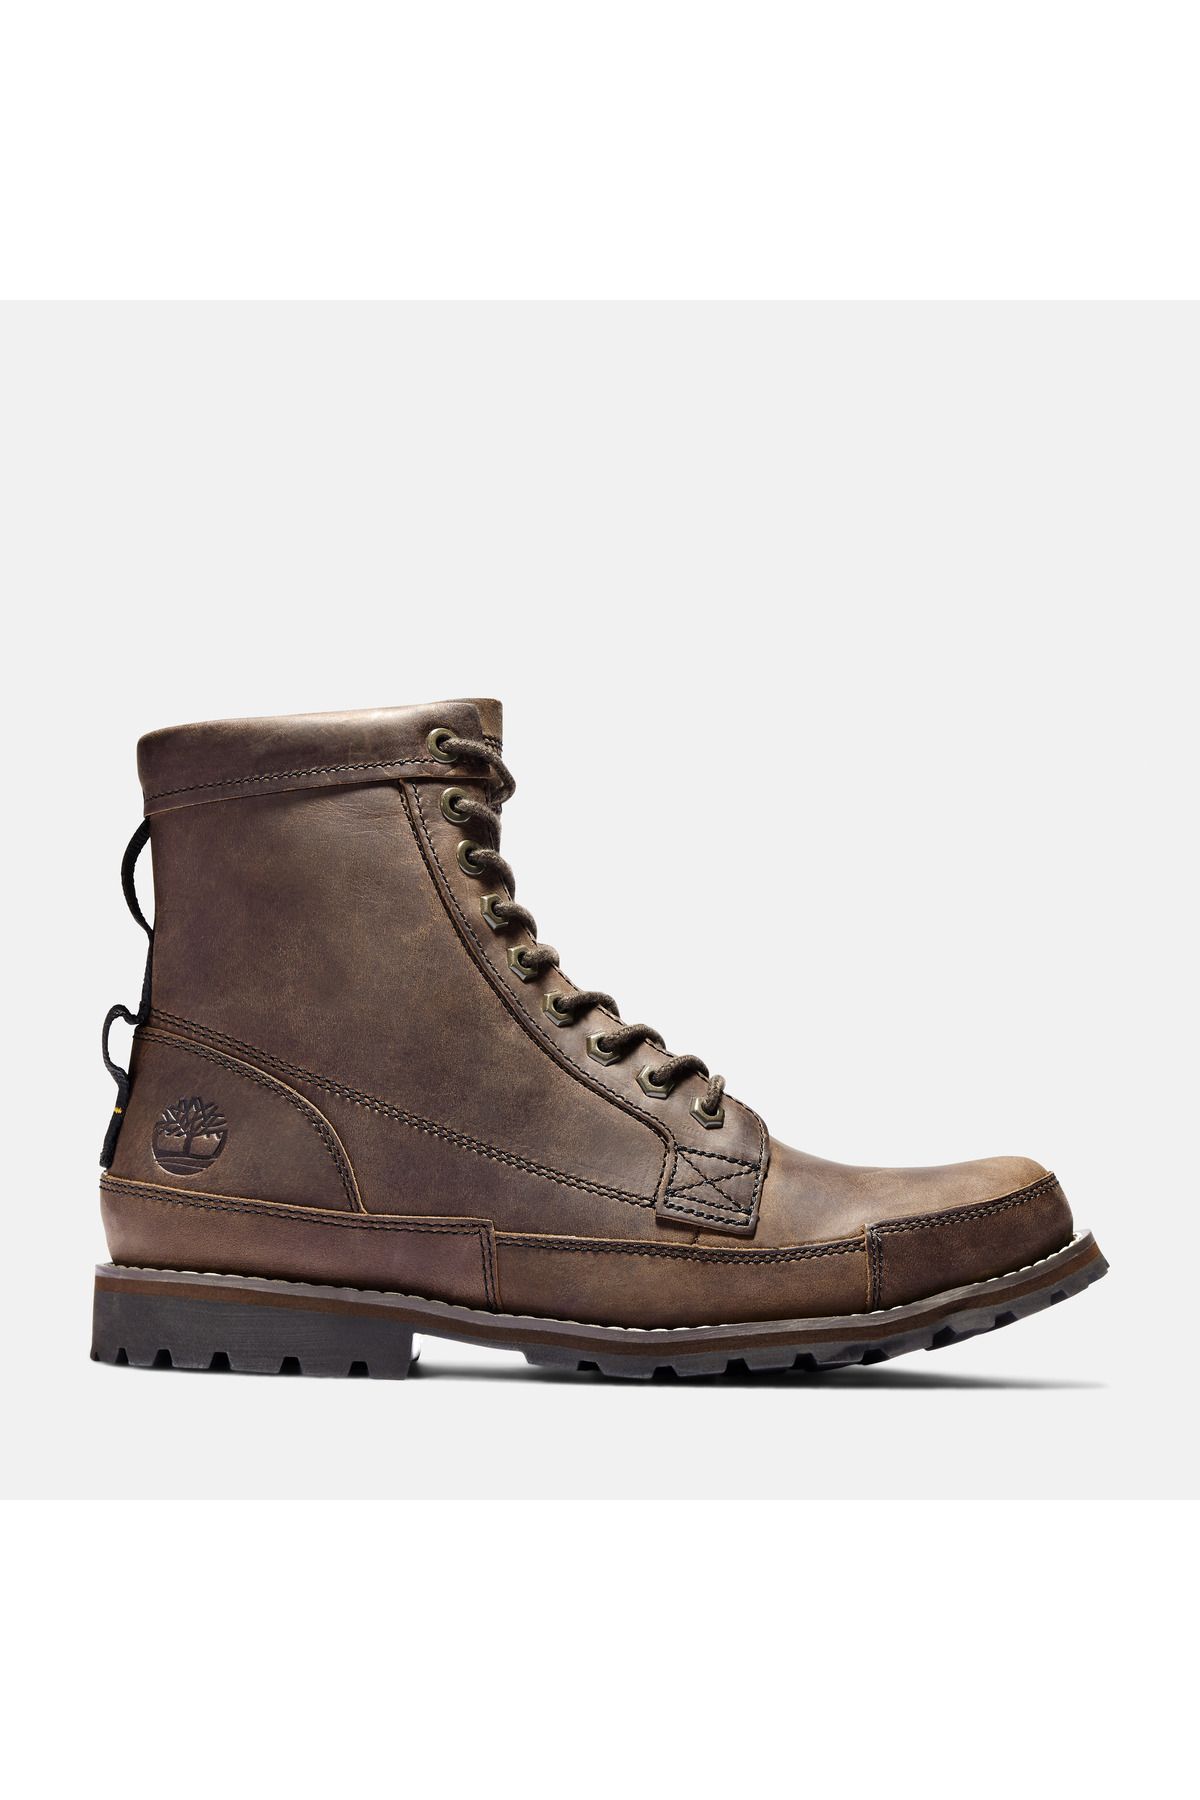 Timberland Originals II Leather 6 in Boot